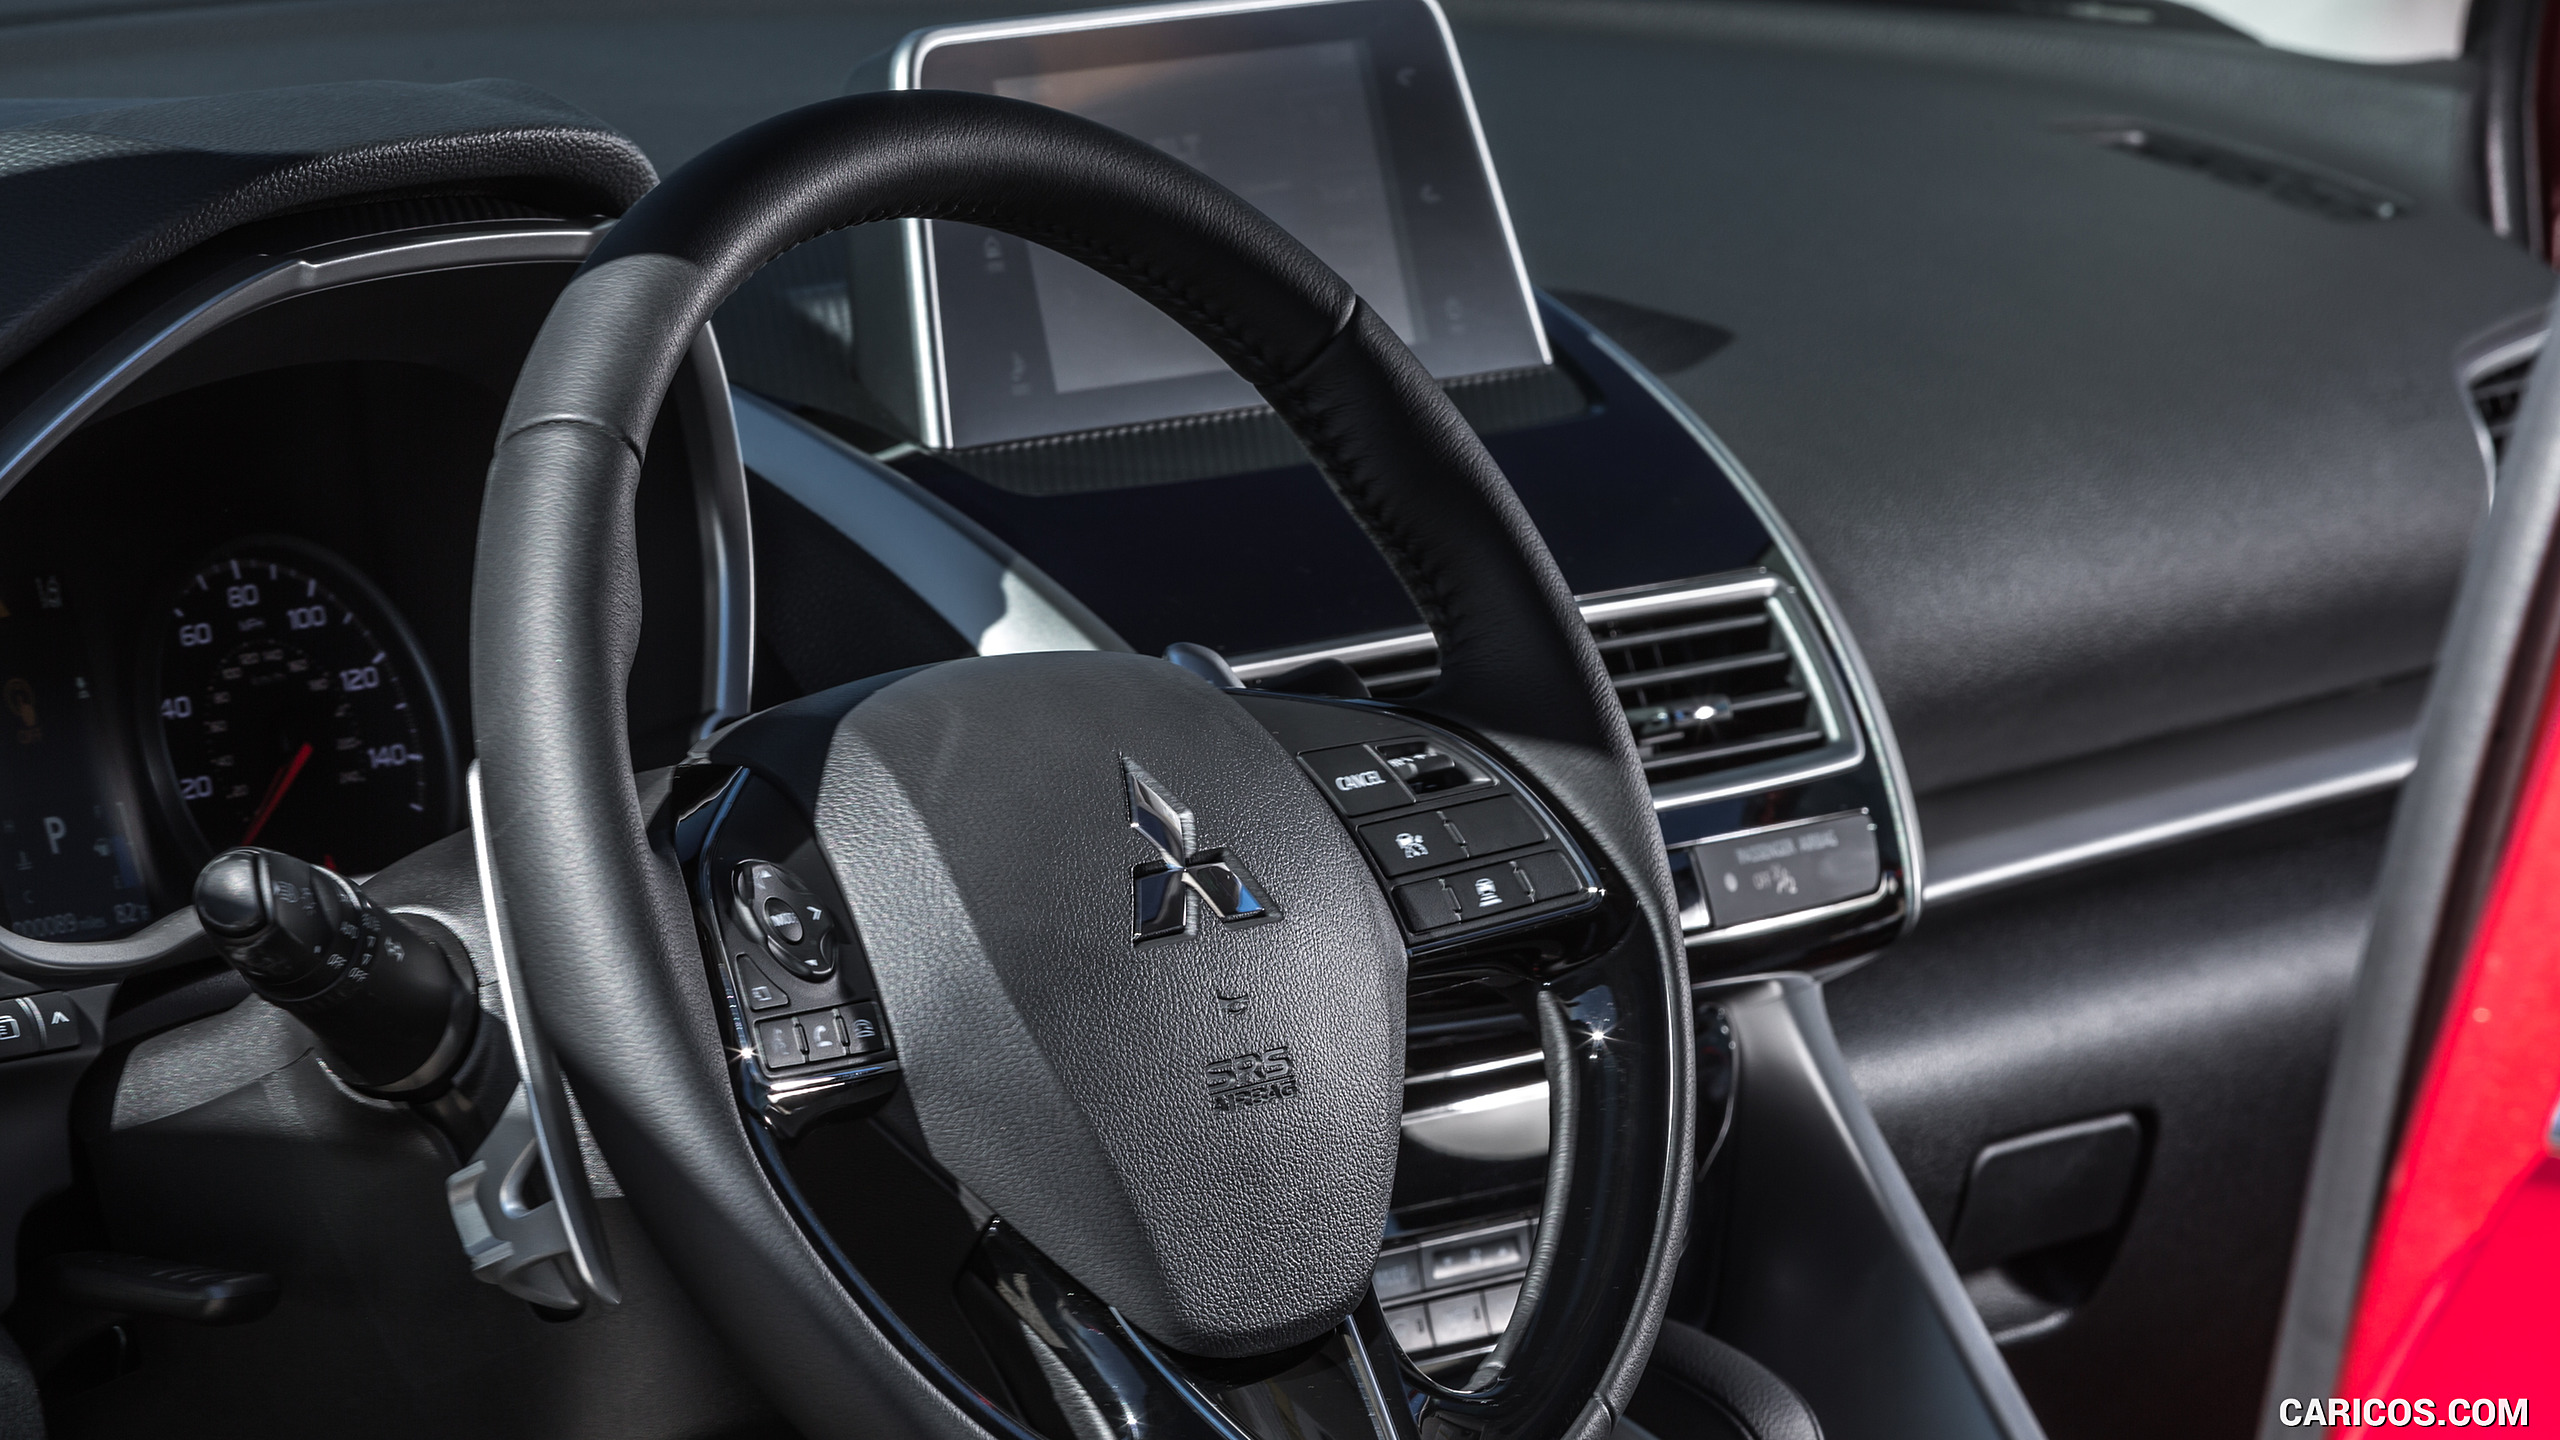 2018 Mitsubishi Eclipse Cross - Interior, Steering Wheel, #107 of 173